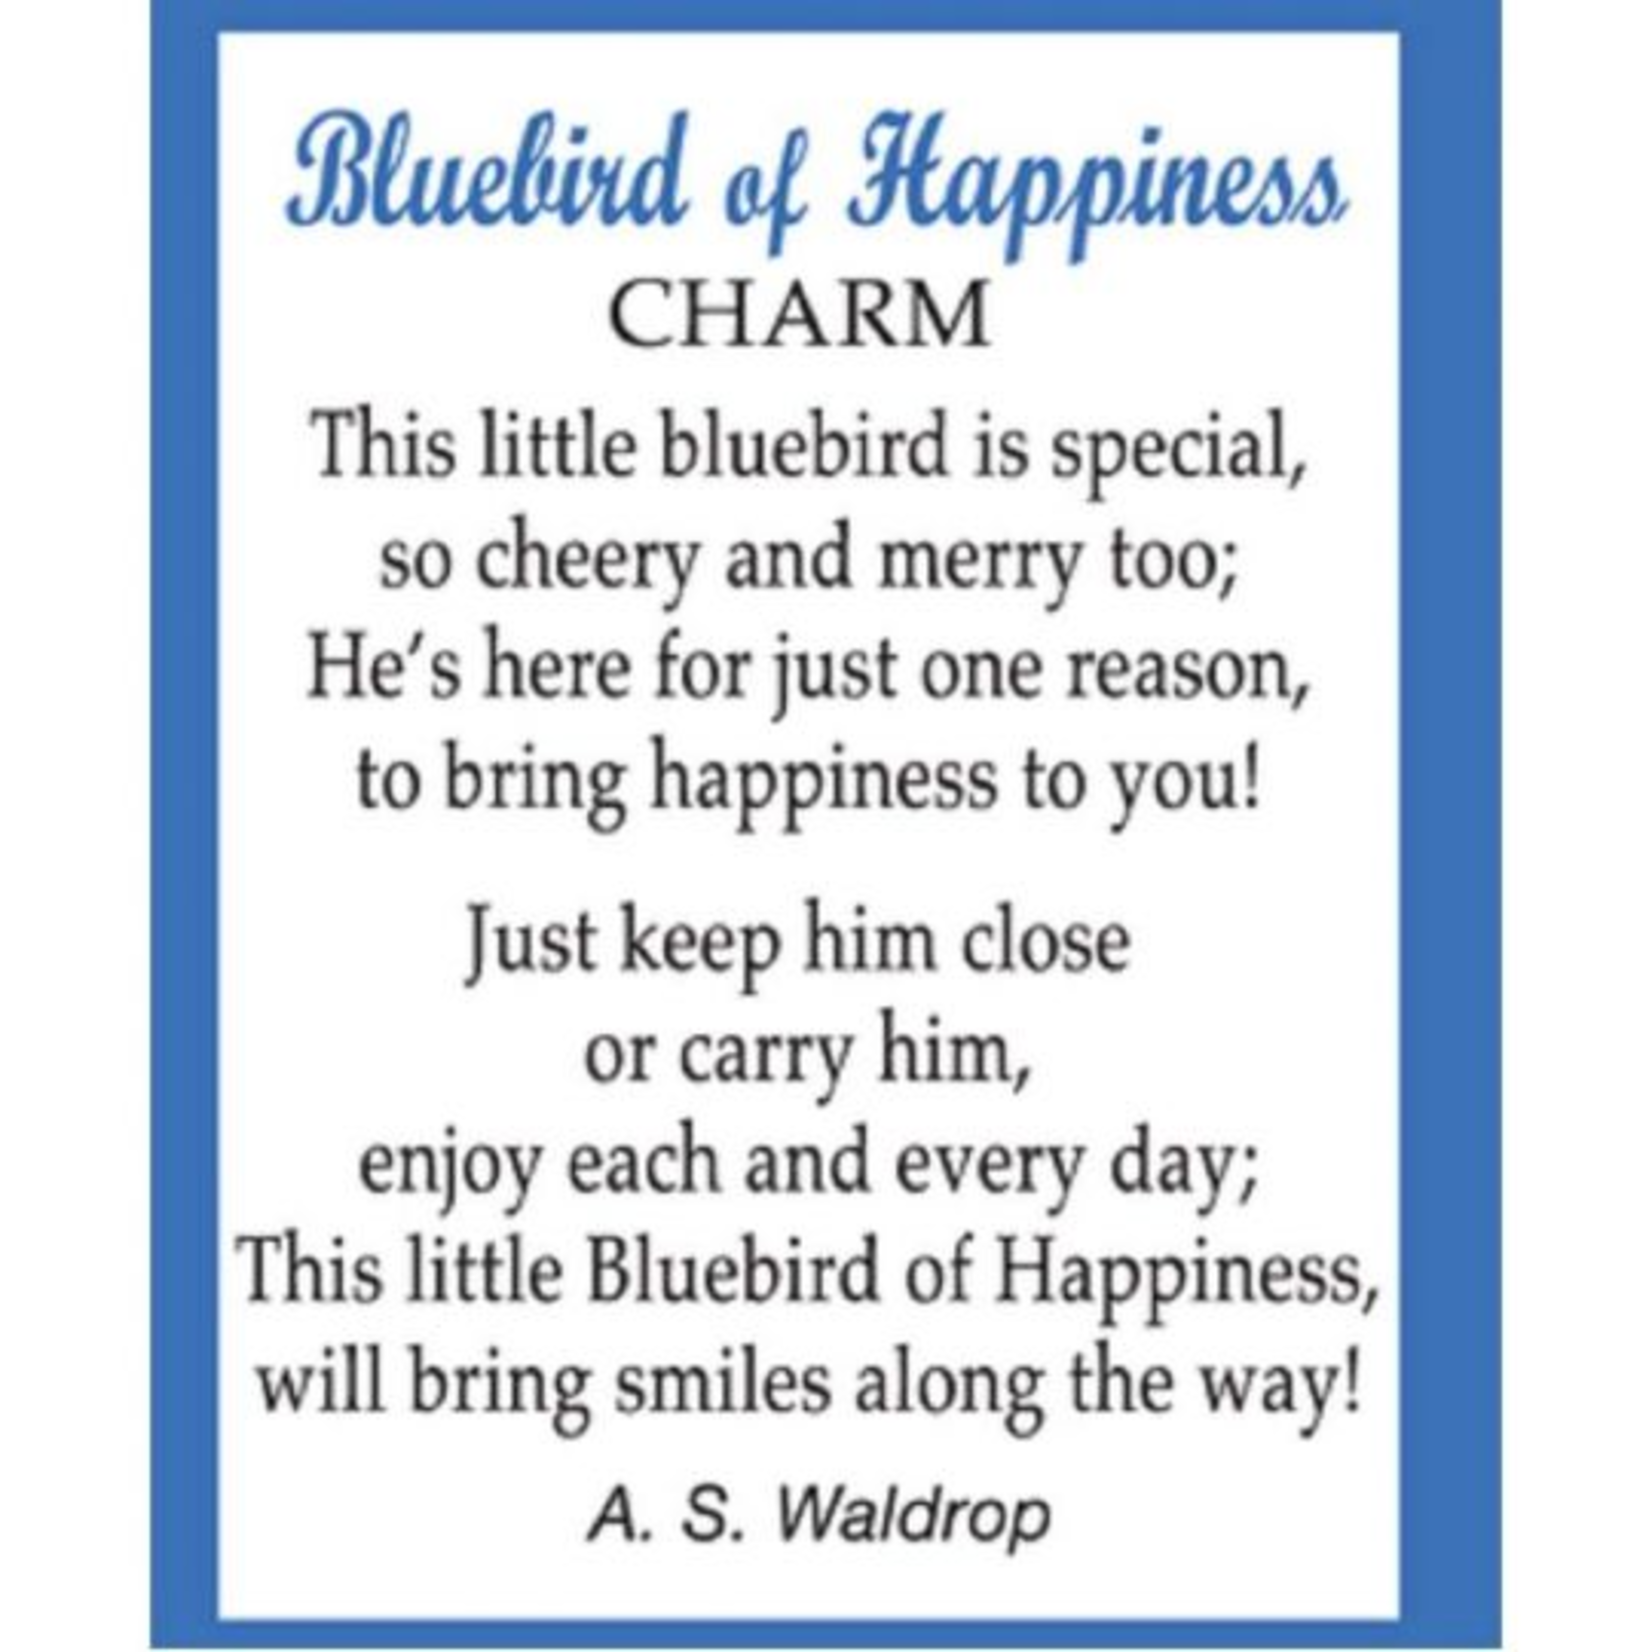 Ganz Bluebird of Happiness Charm